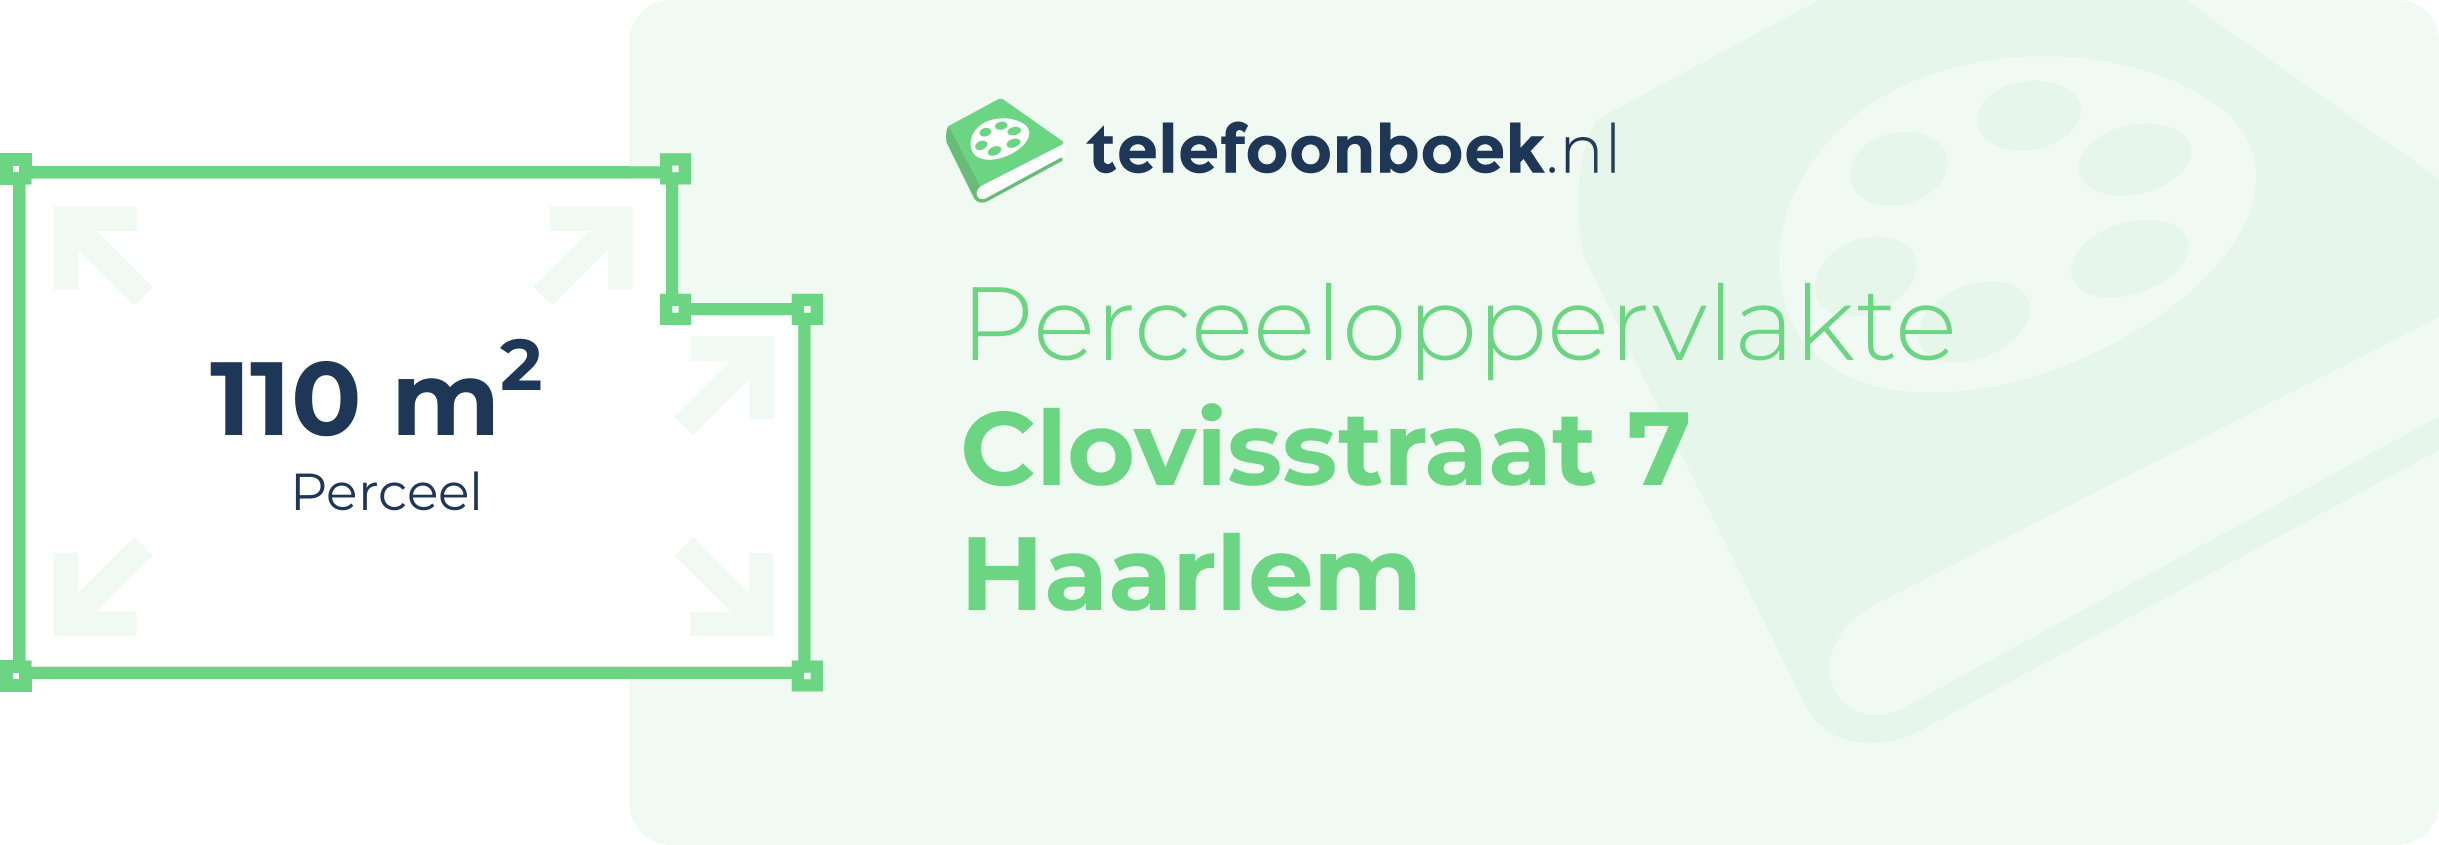 Perceeloppervlakte Clovisstraat 7 Haarlem